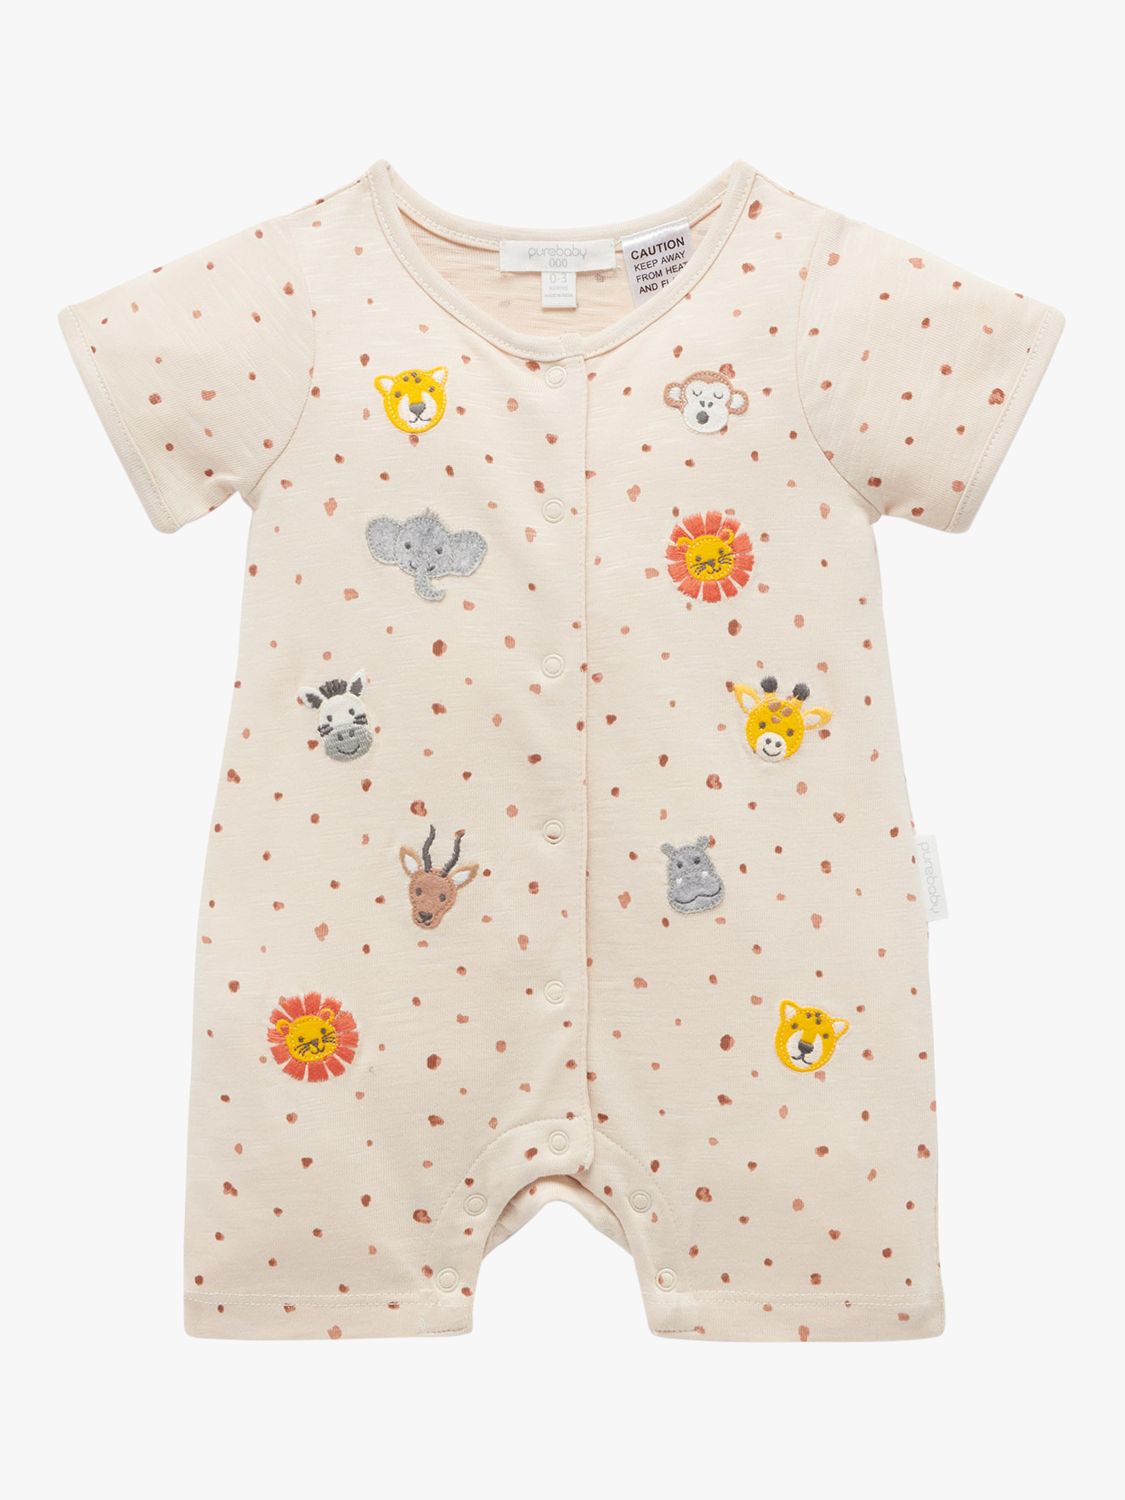 Purebaby Baby Organic Cotton Sananna Safari Applique Short Sleeve Growsuit, Oatmeal, 6-12 months